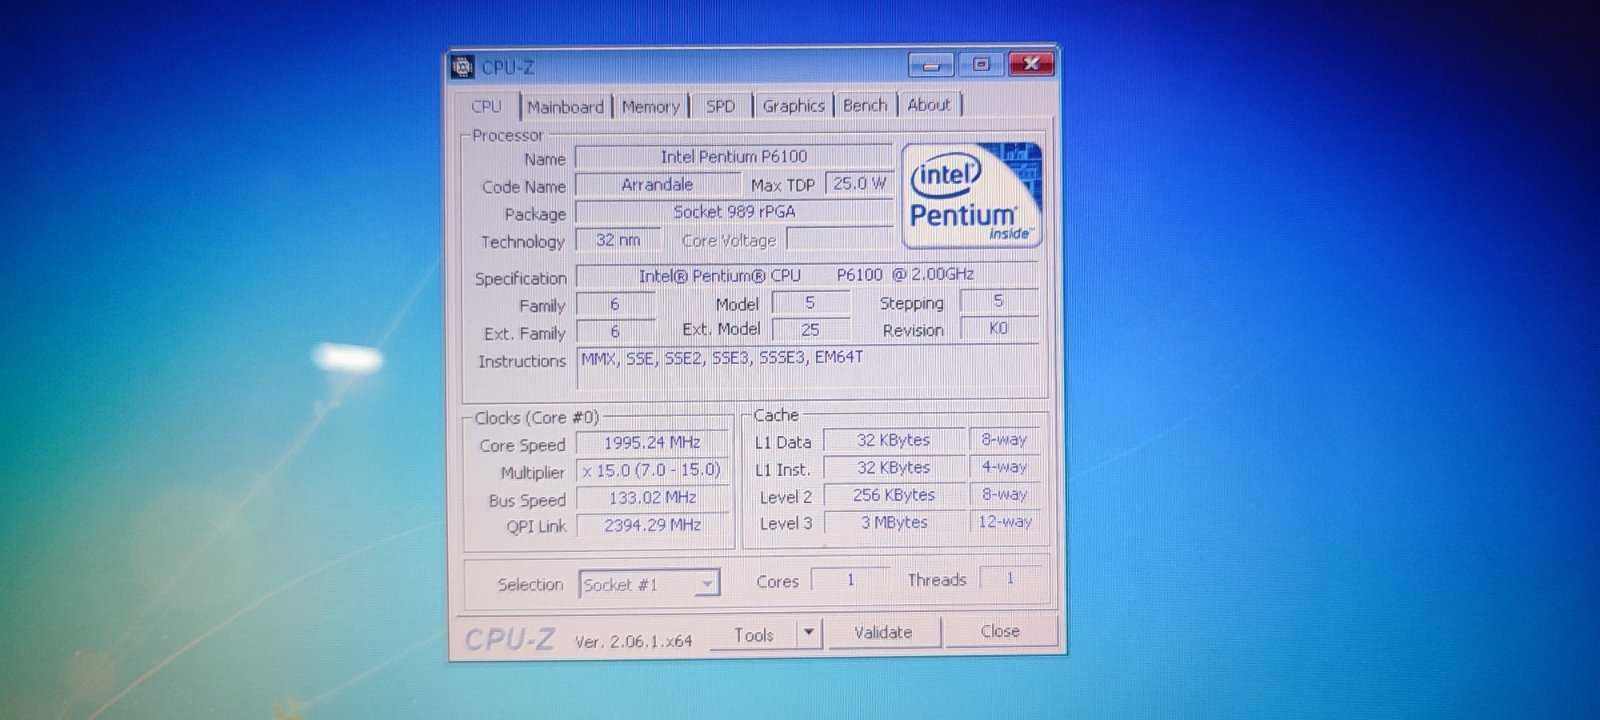 Ноутбук Acer aspire 5742z | Intel Pentium p6100 | 4GB | Windows 7|